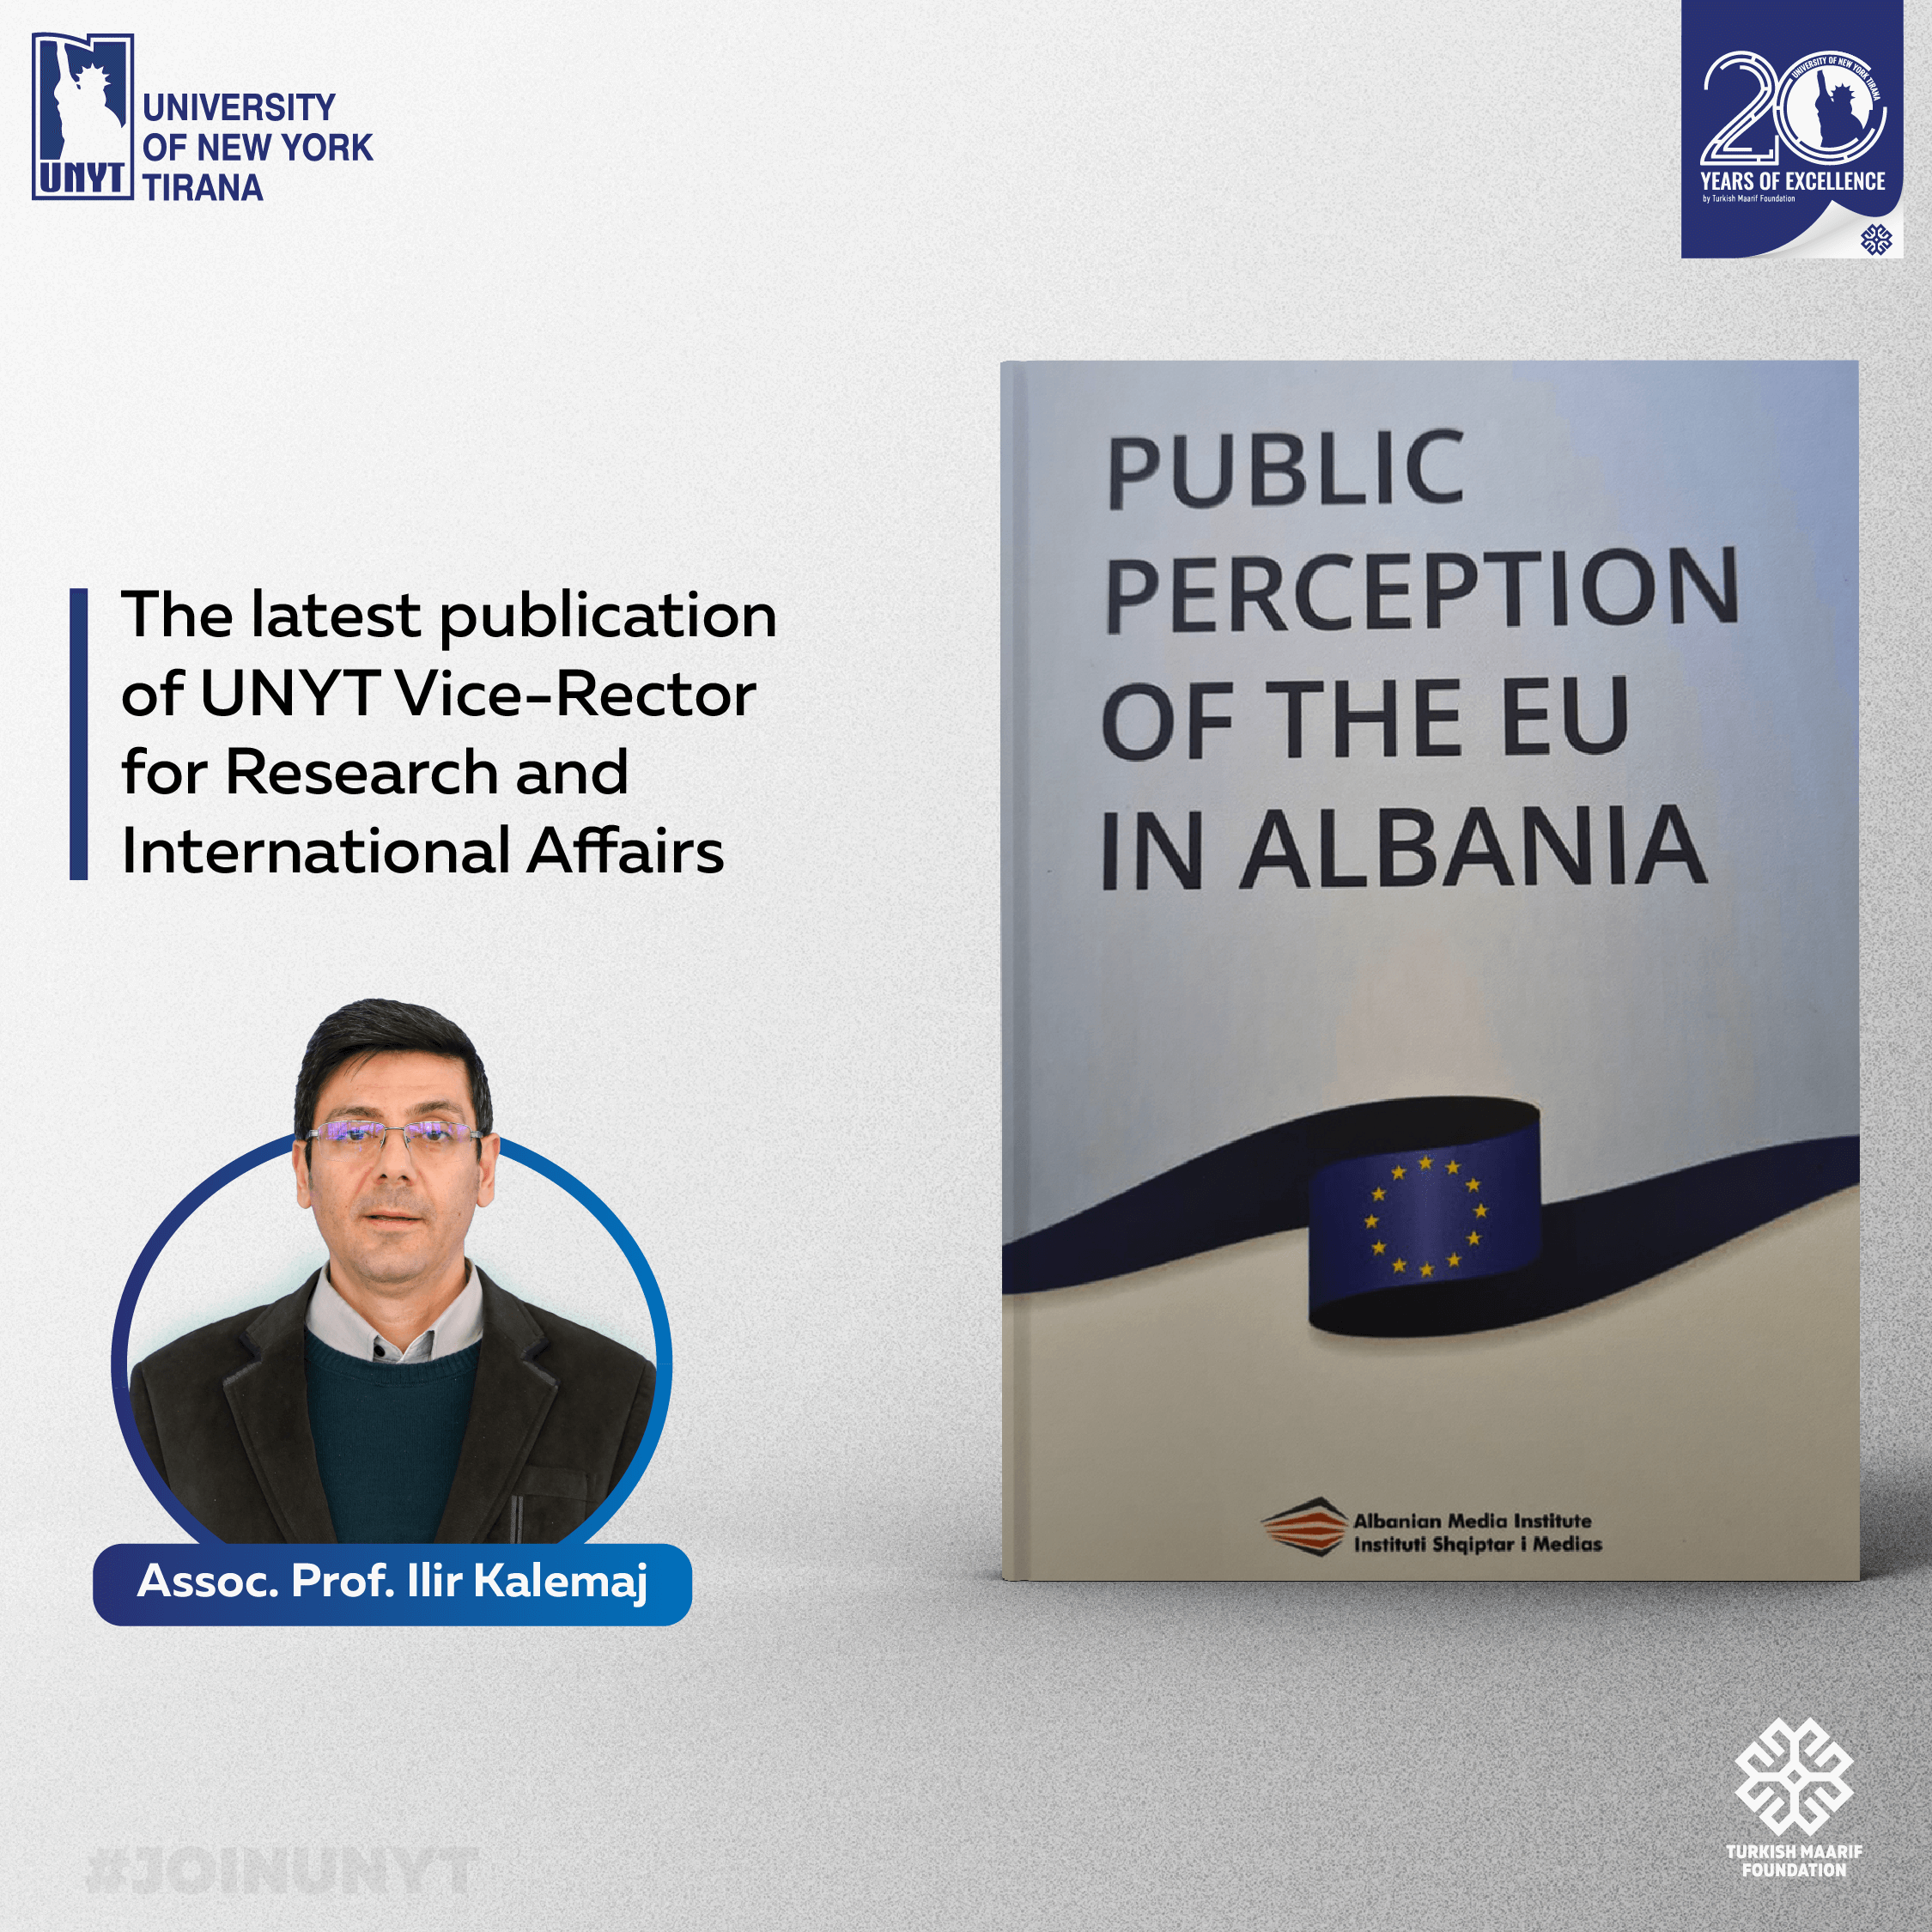 “Public Perception of the EU in Albania” | Assoc. Prof. Ilir Kalemaj